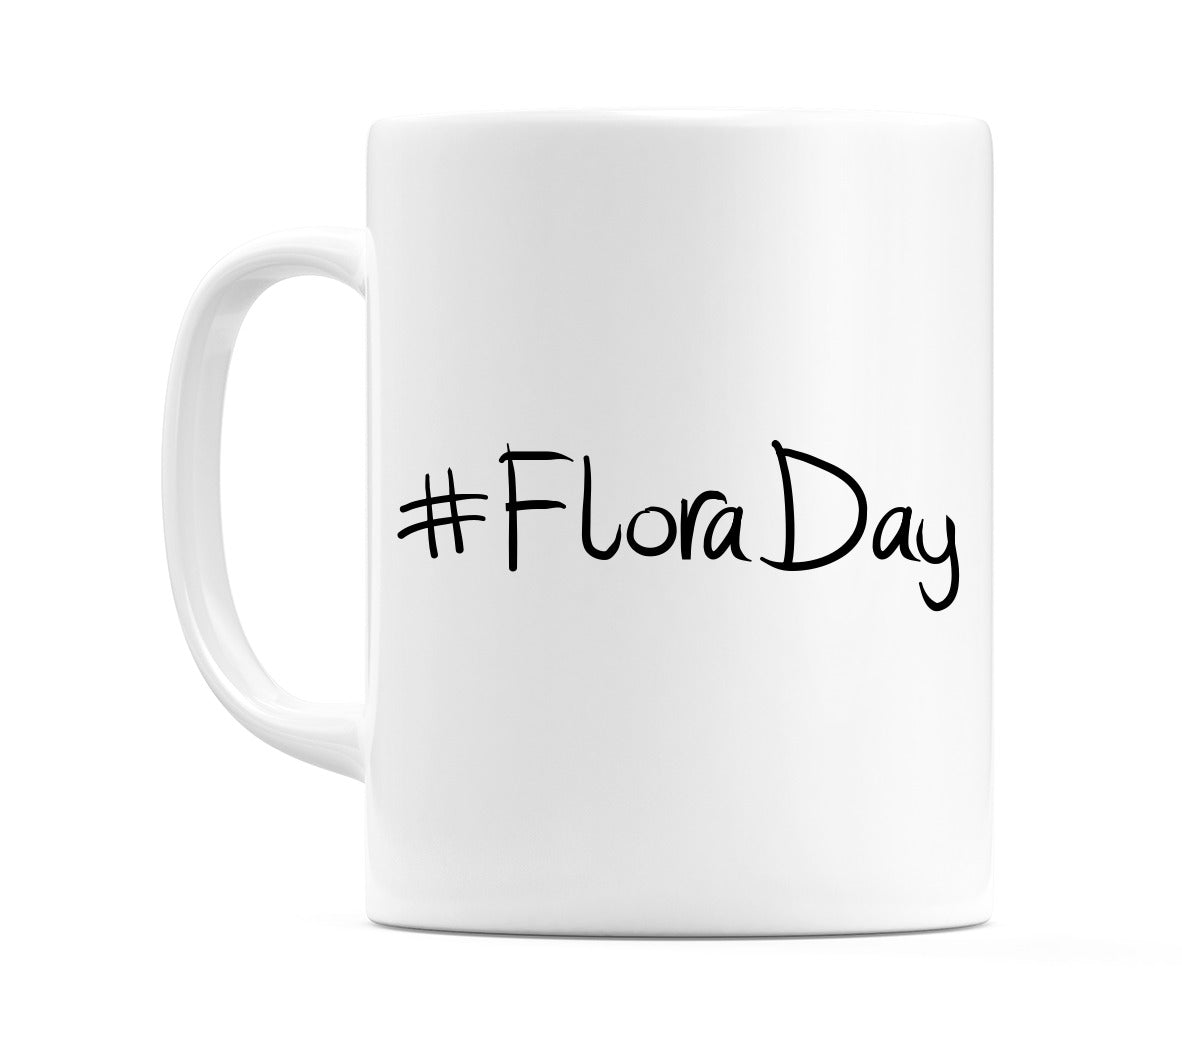 #FloraDay Mug